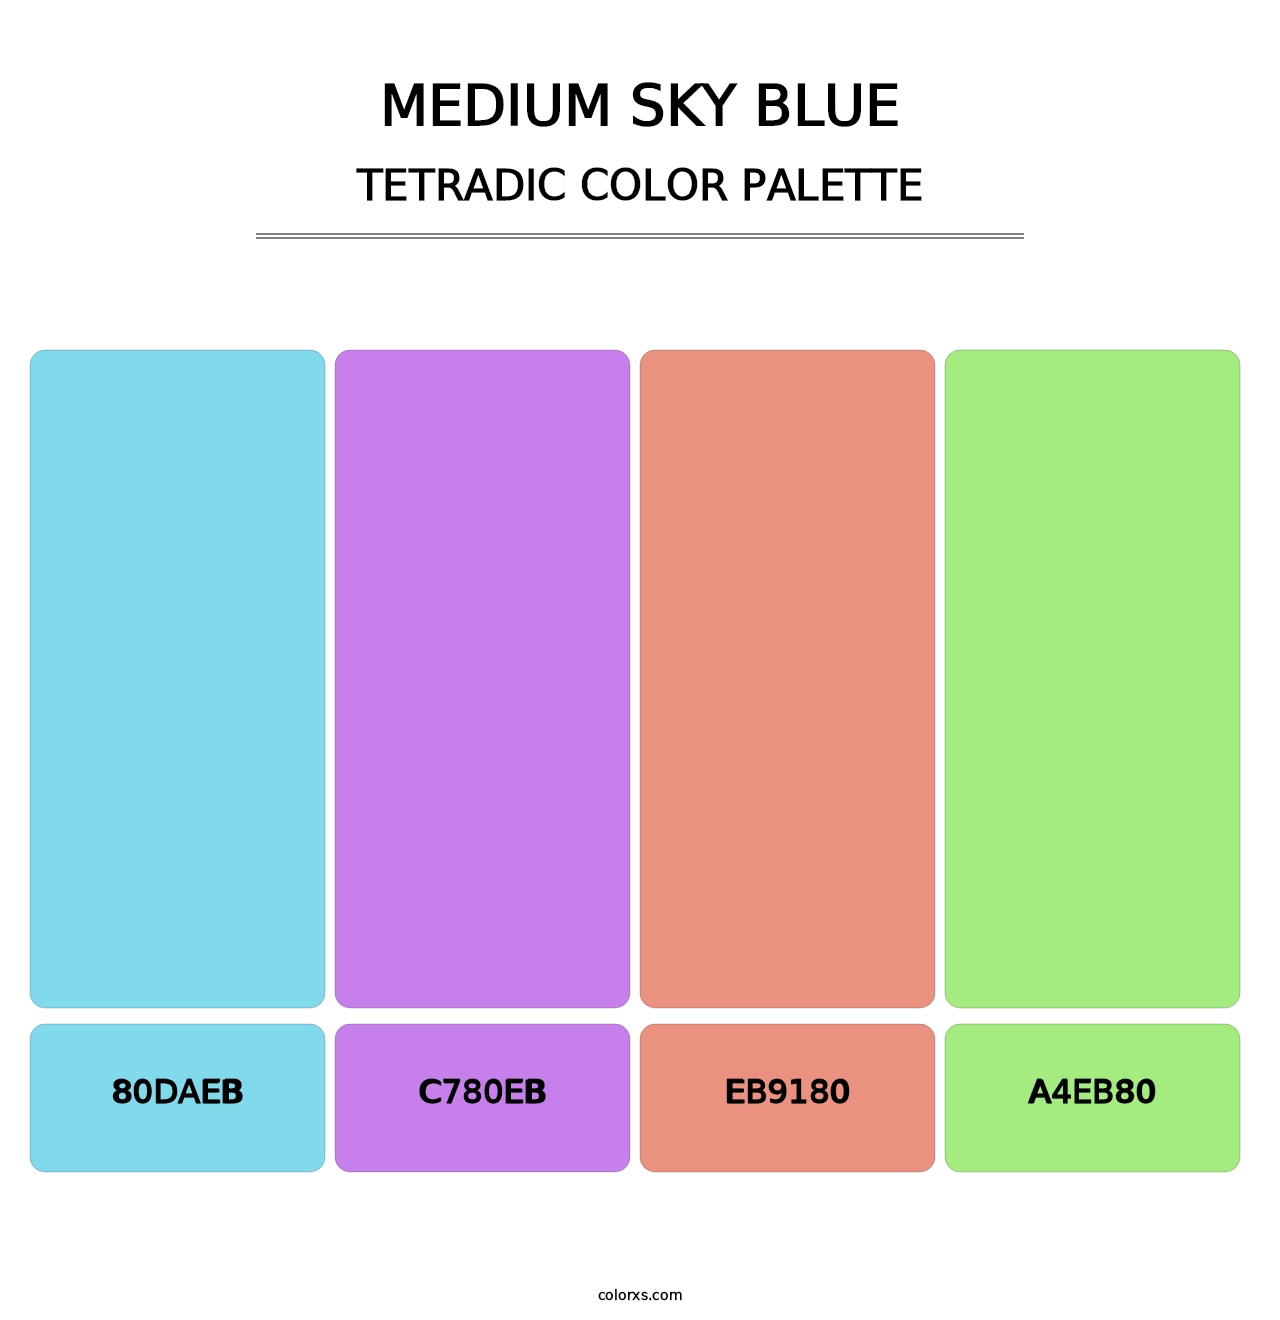 Medium Sky Blue - Tetradic Color Palette